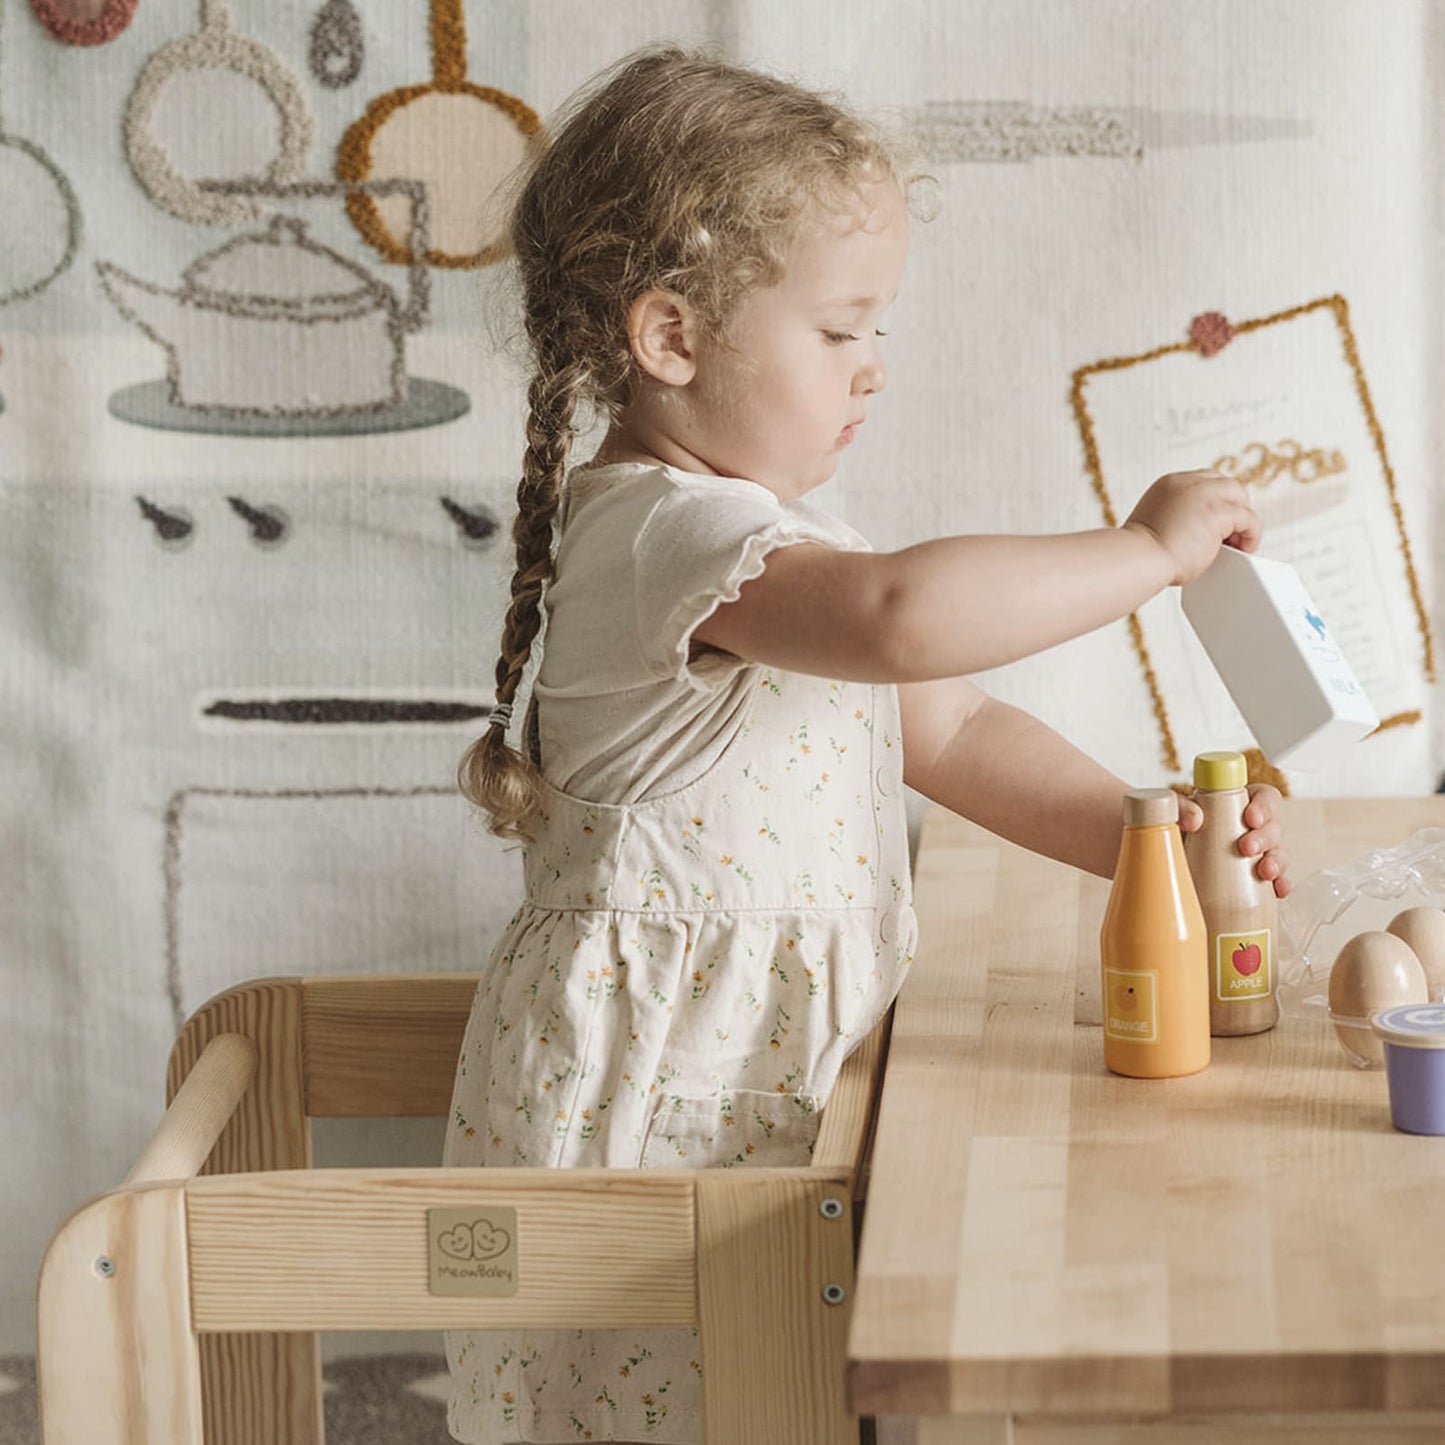 MeowBaby® Kitchen Helper Drewniany Pomocnik Kuchenny dla Dziecka, Naturalne Drewno